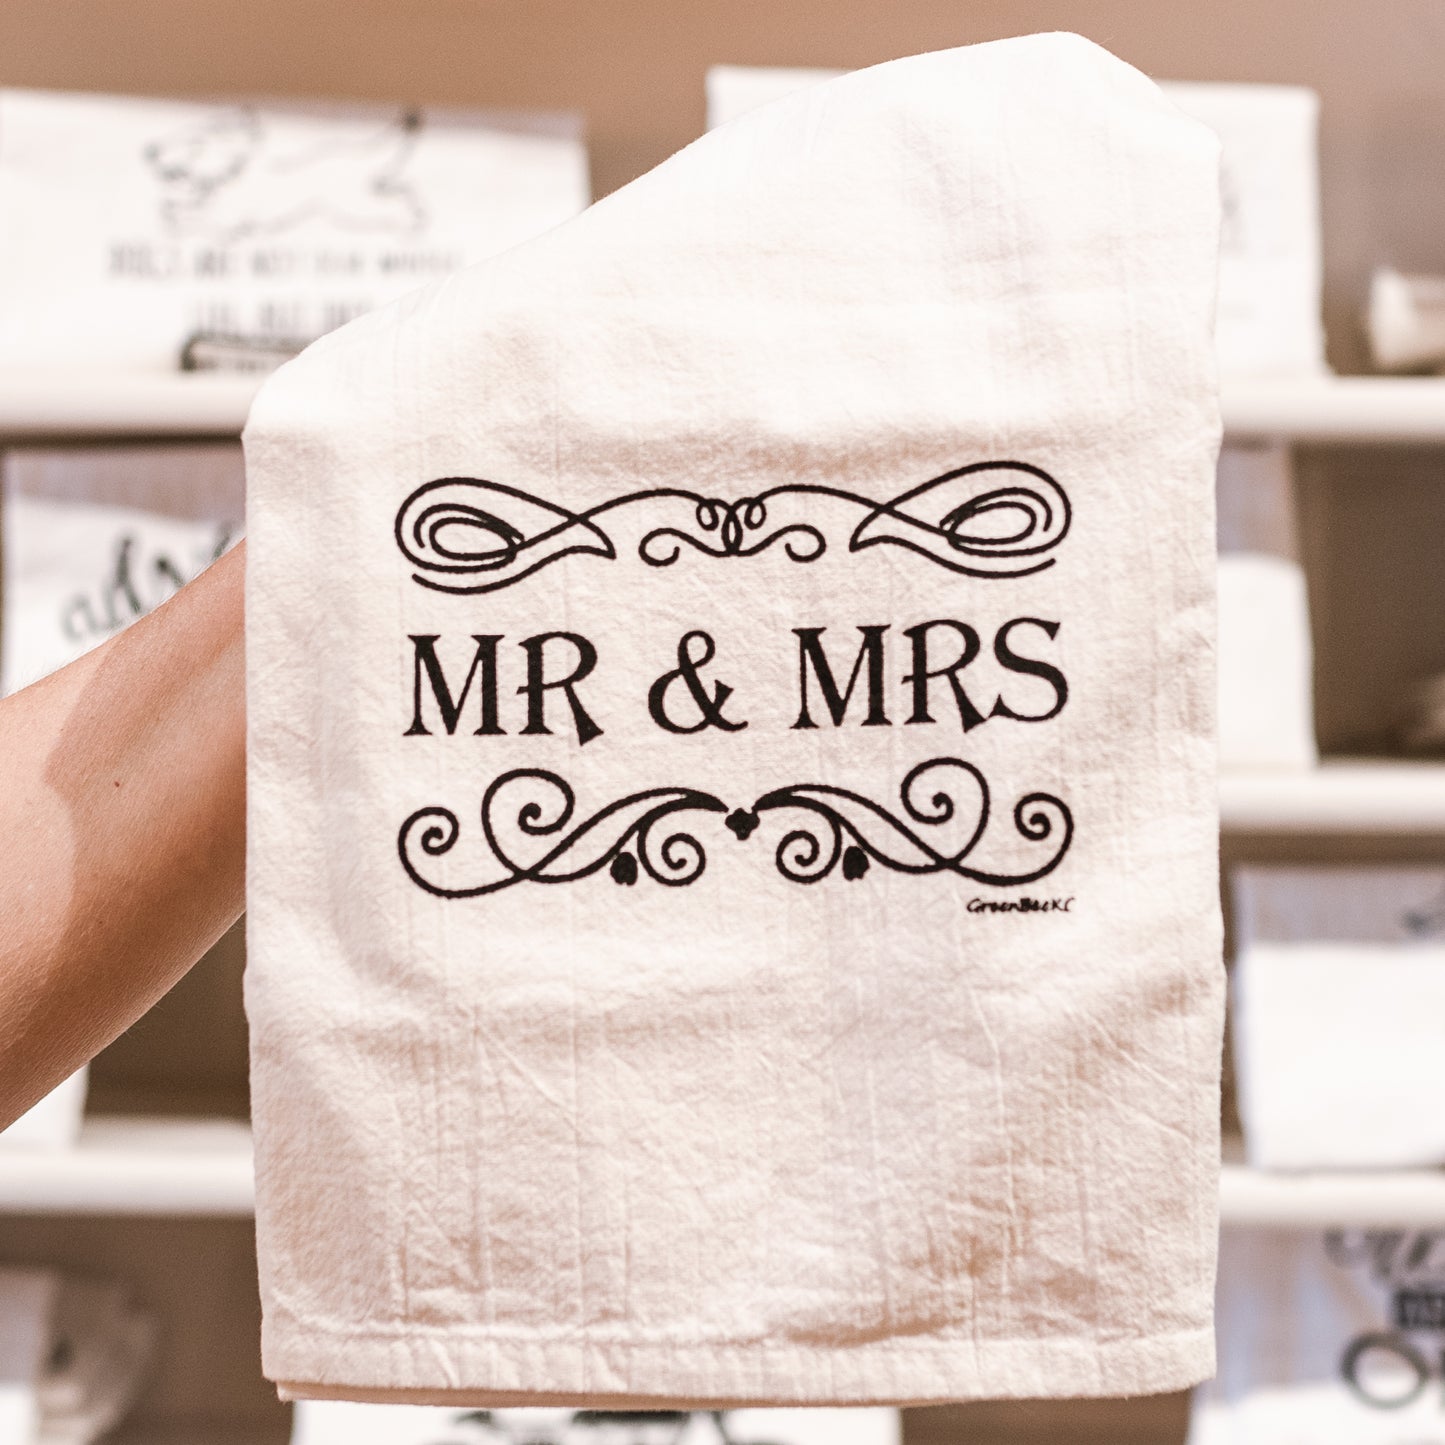 Mr. & Mrs. Cotton Tea Kitchen Towel